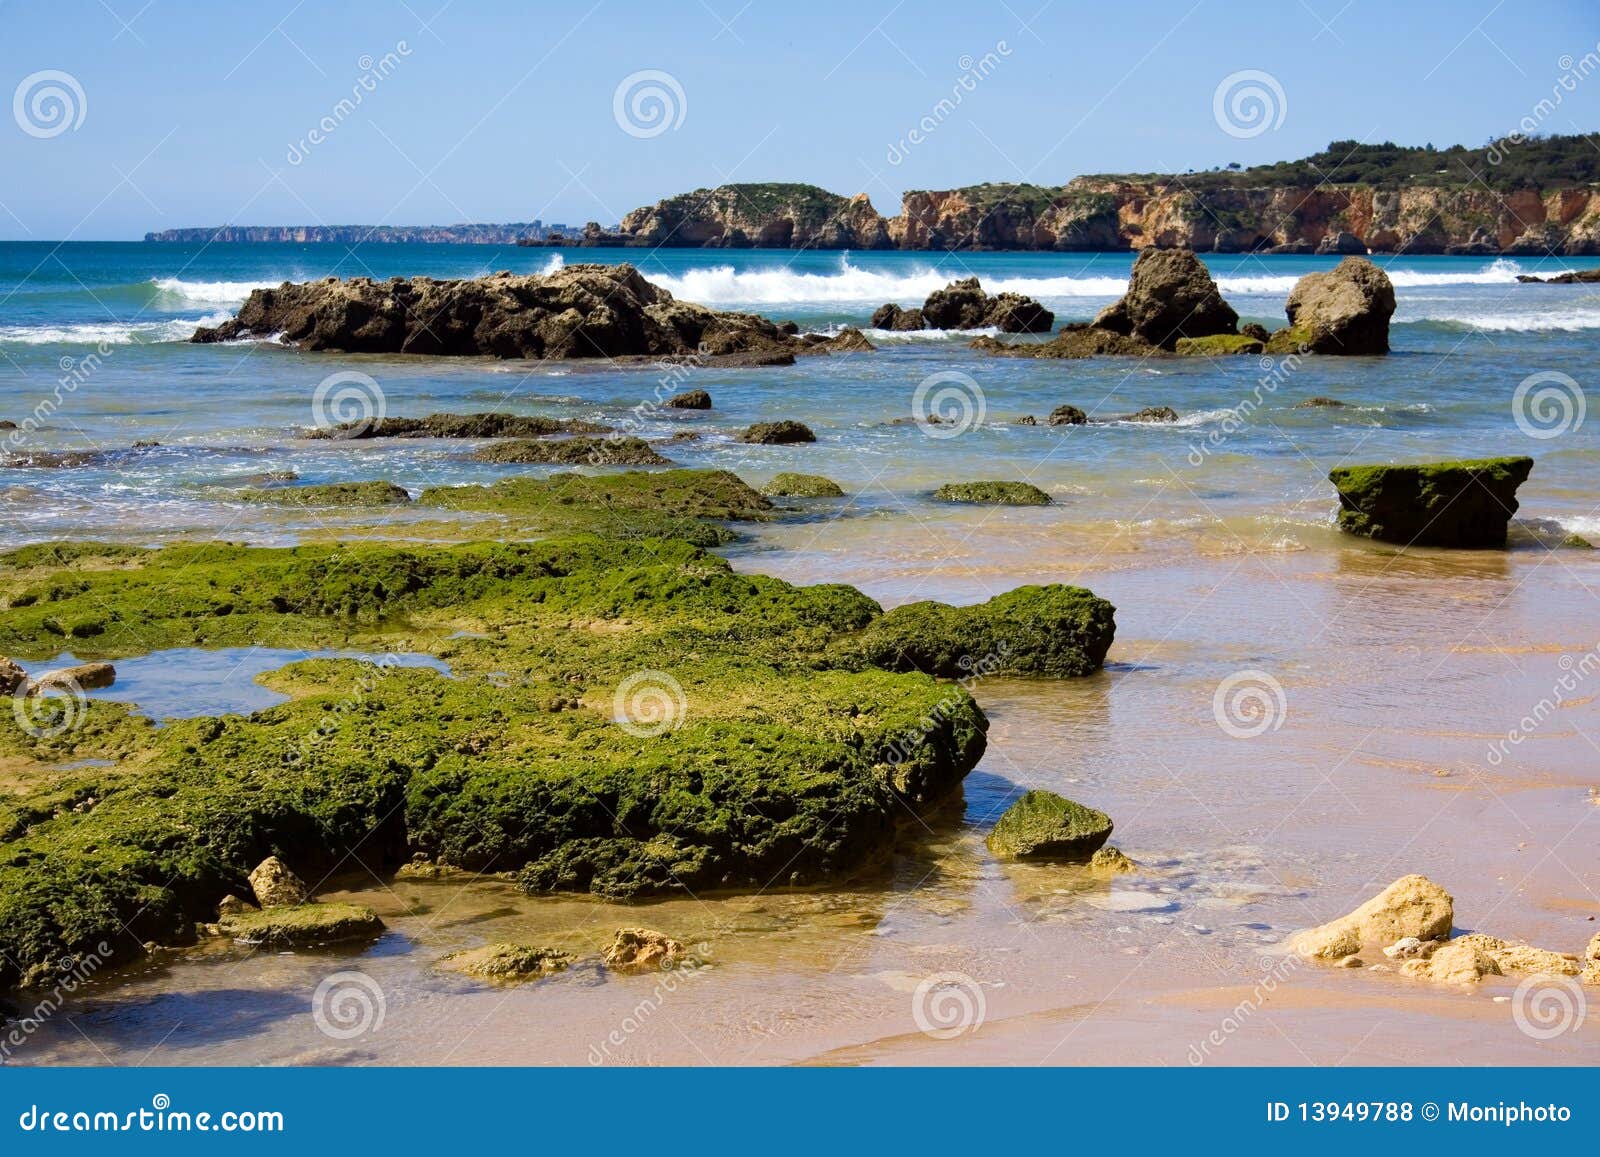 praia da rocha beach,portugal-algarve